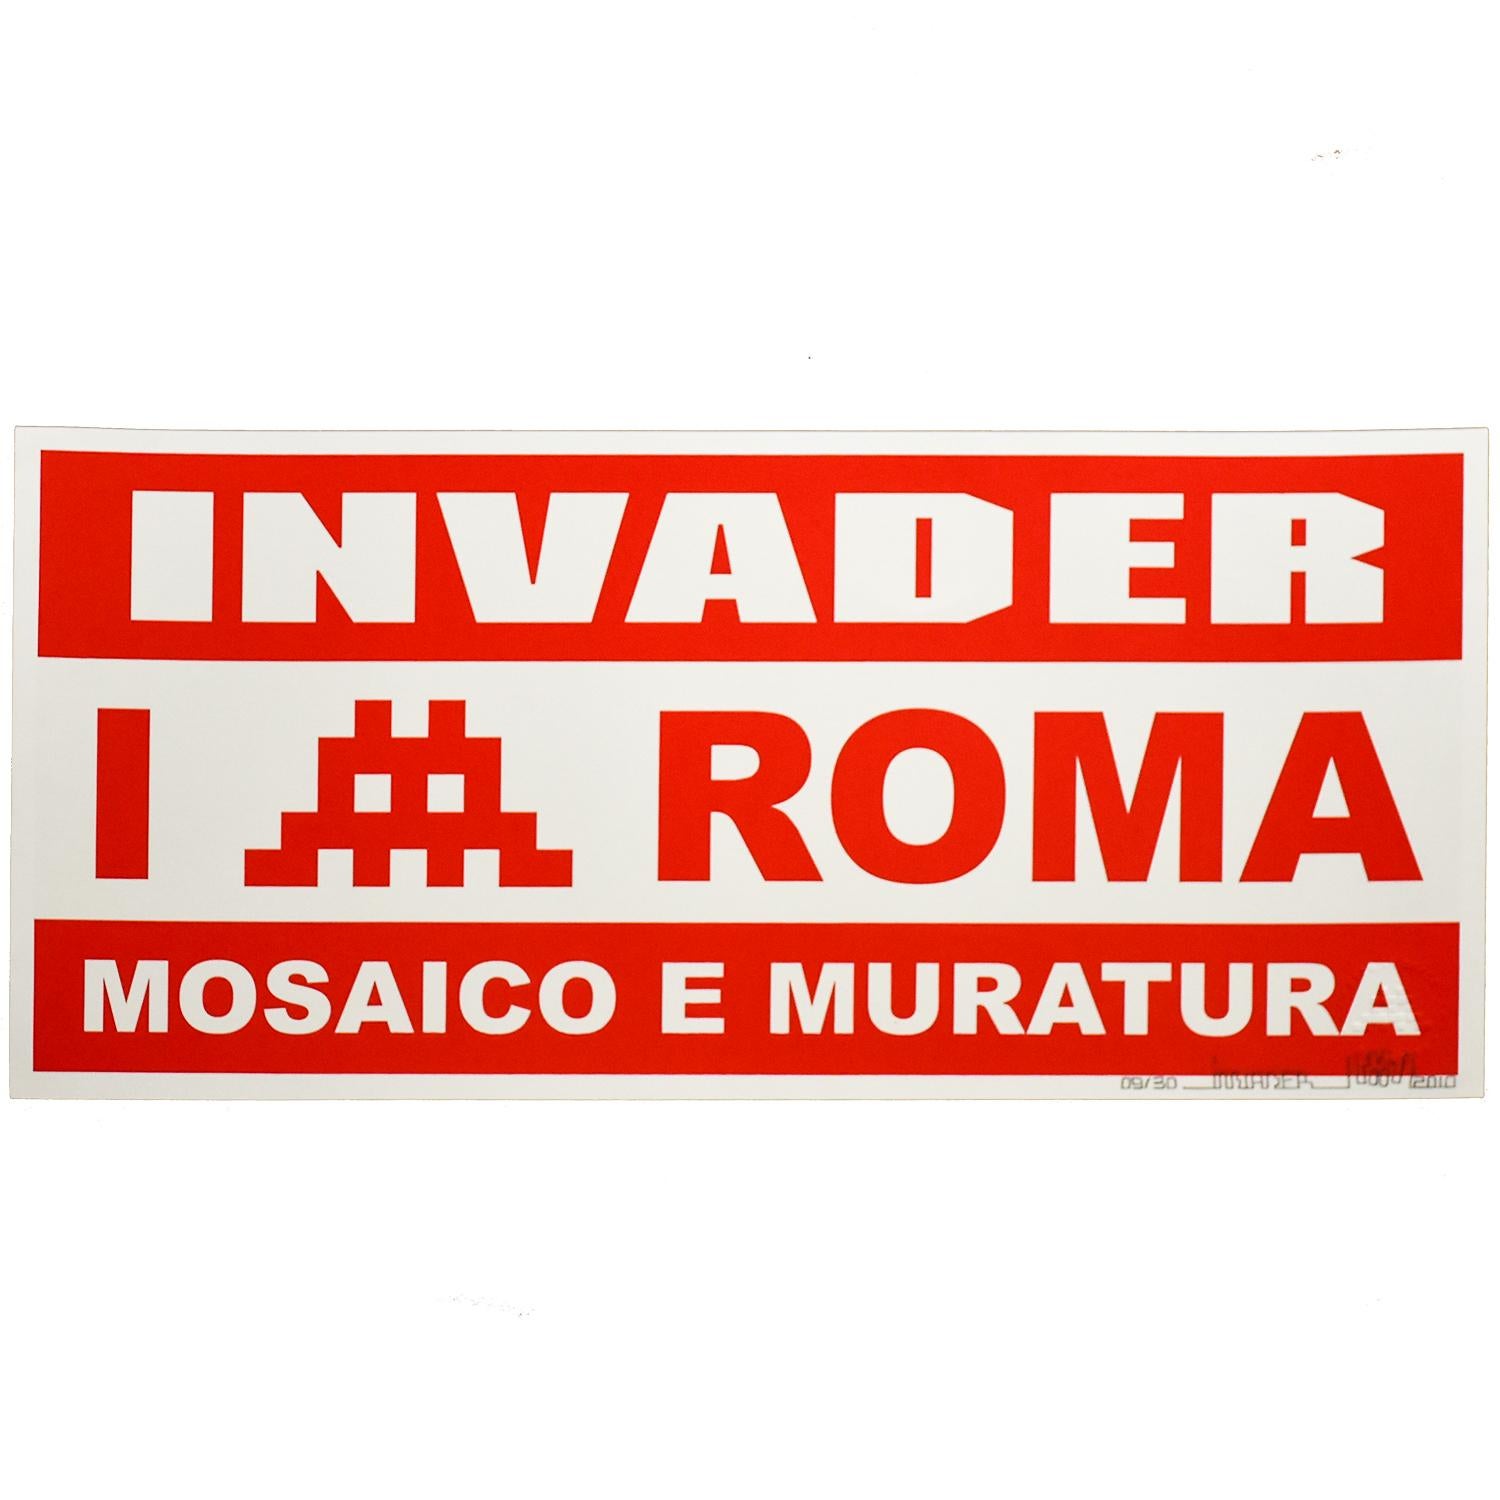 INVADER Mosaico E Muratura - Print by Invader